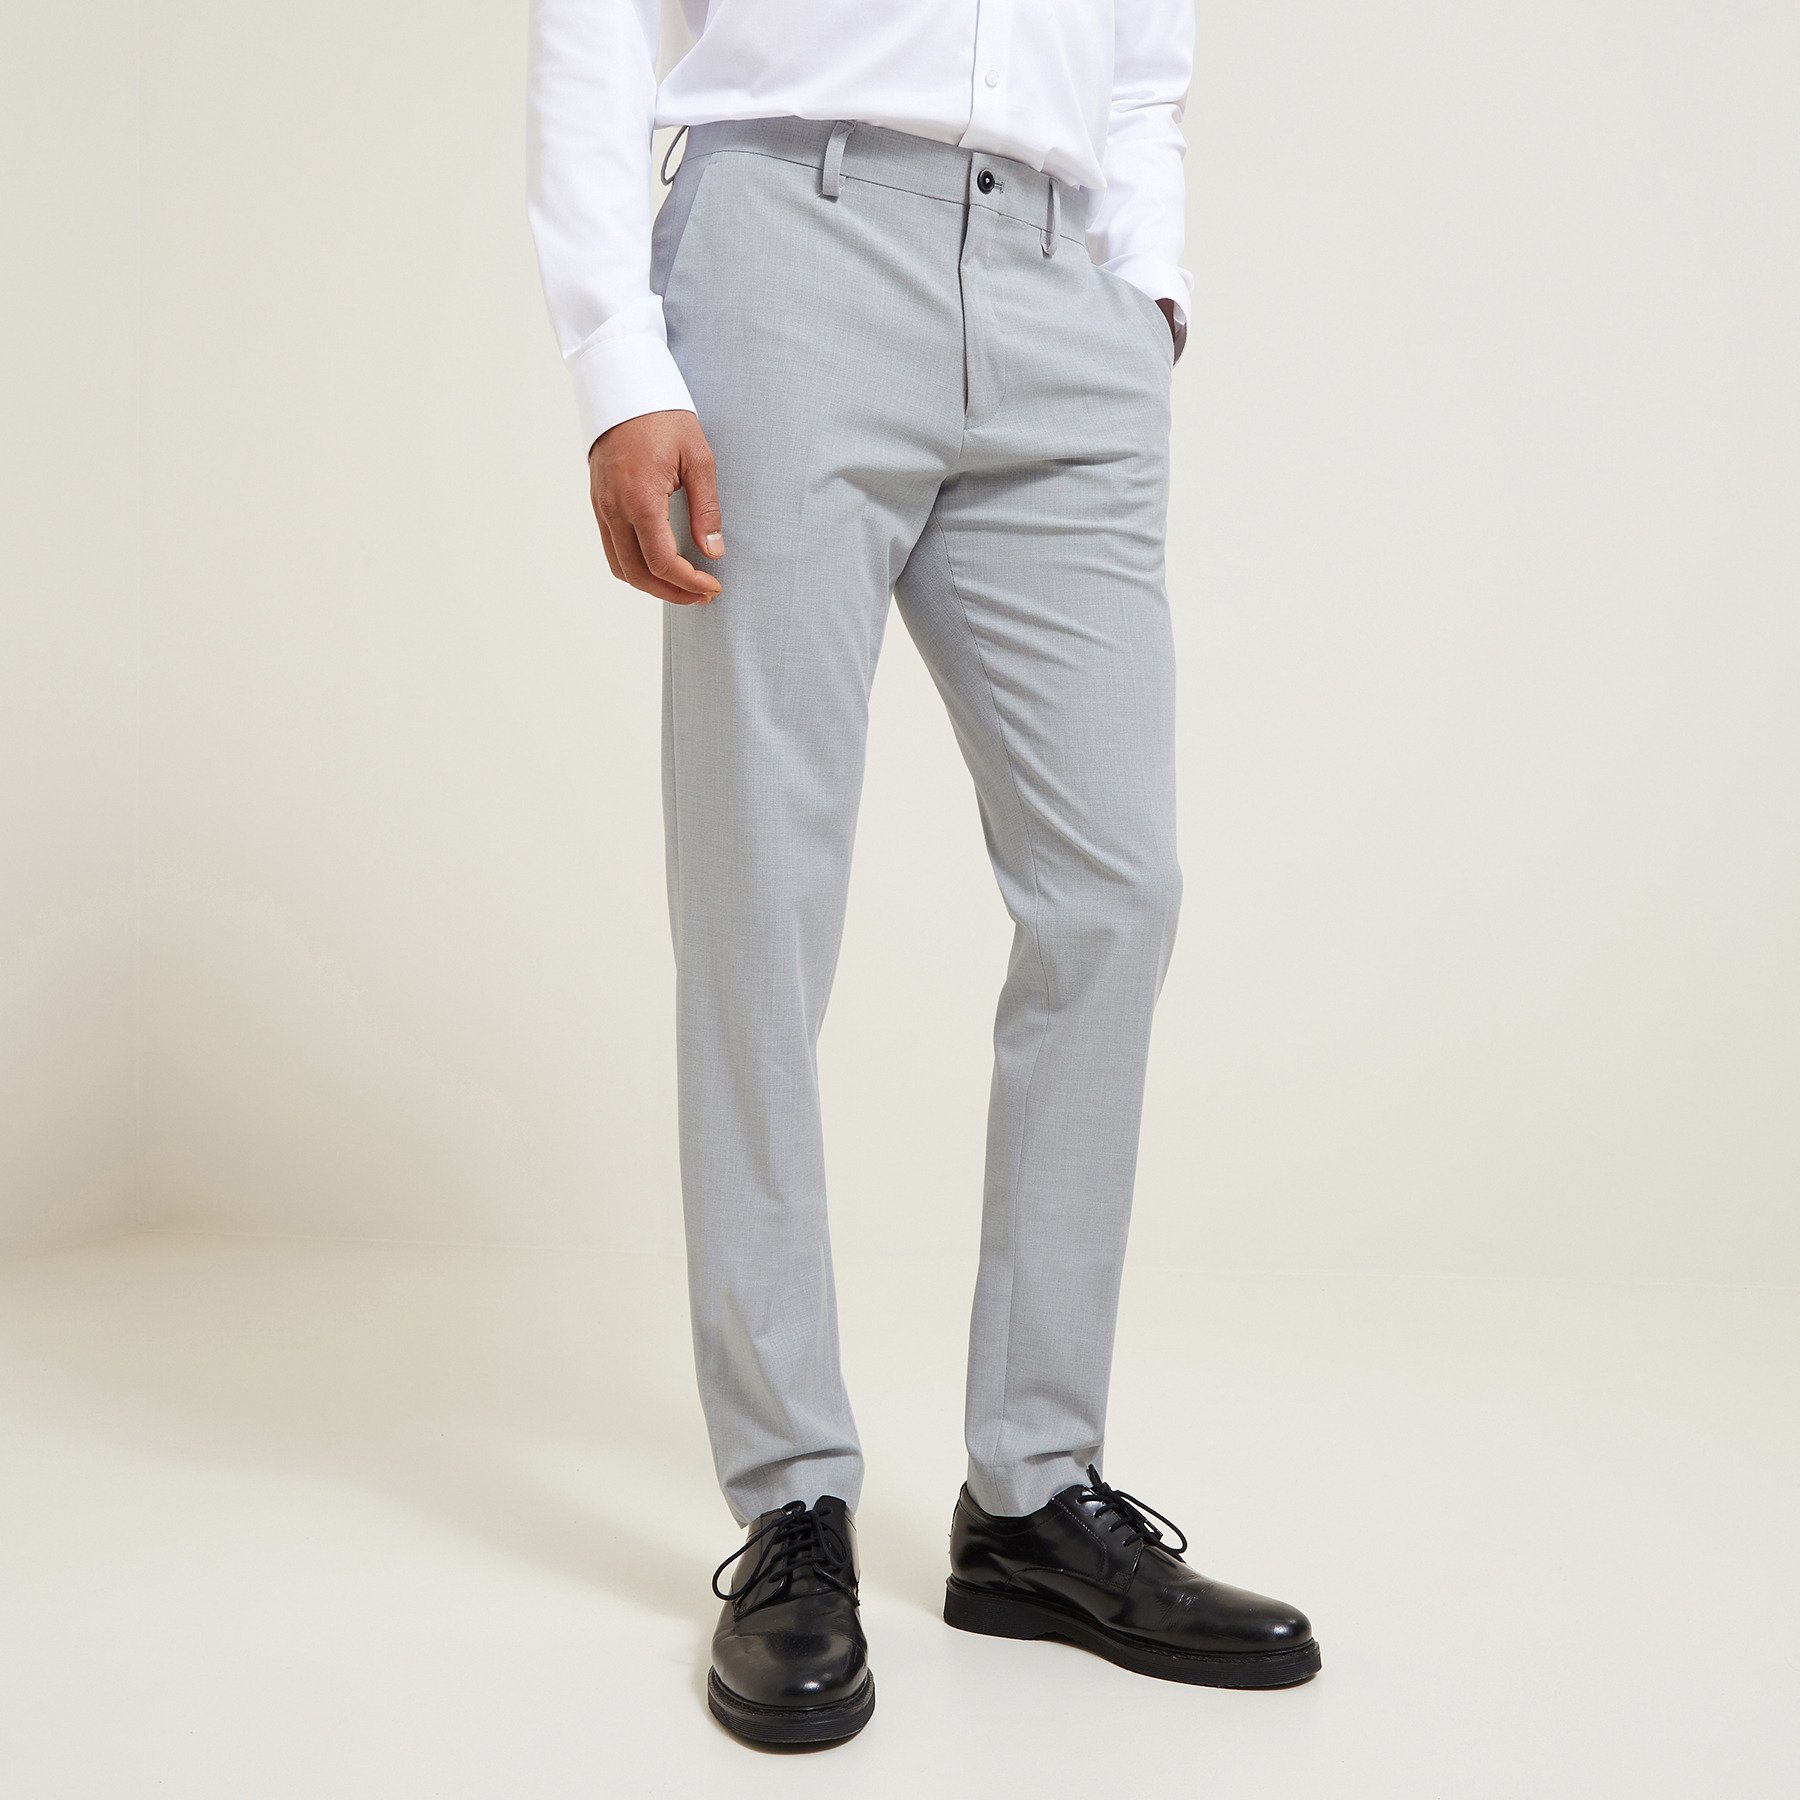 Pantalon de costume extra slim Gris 36 66% Polyester, 28% Viscose, 6% Elasthanne Homme